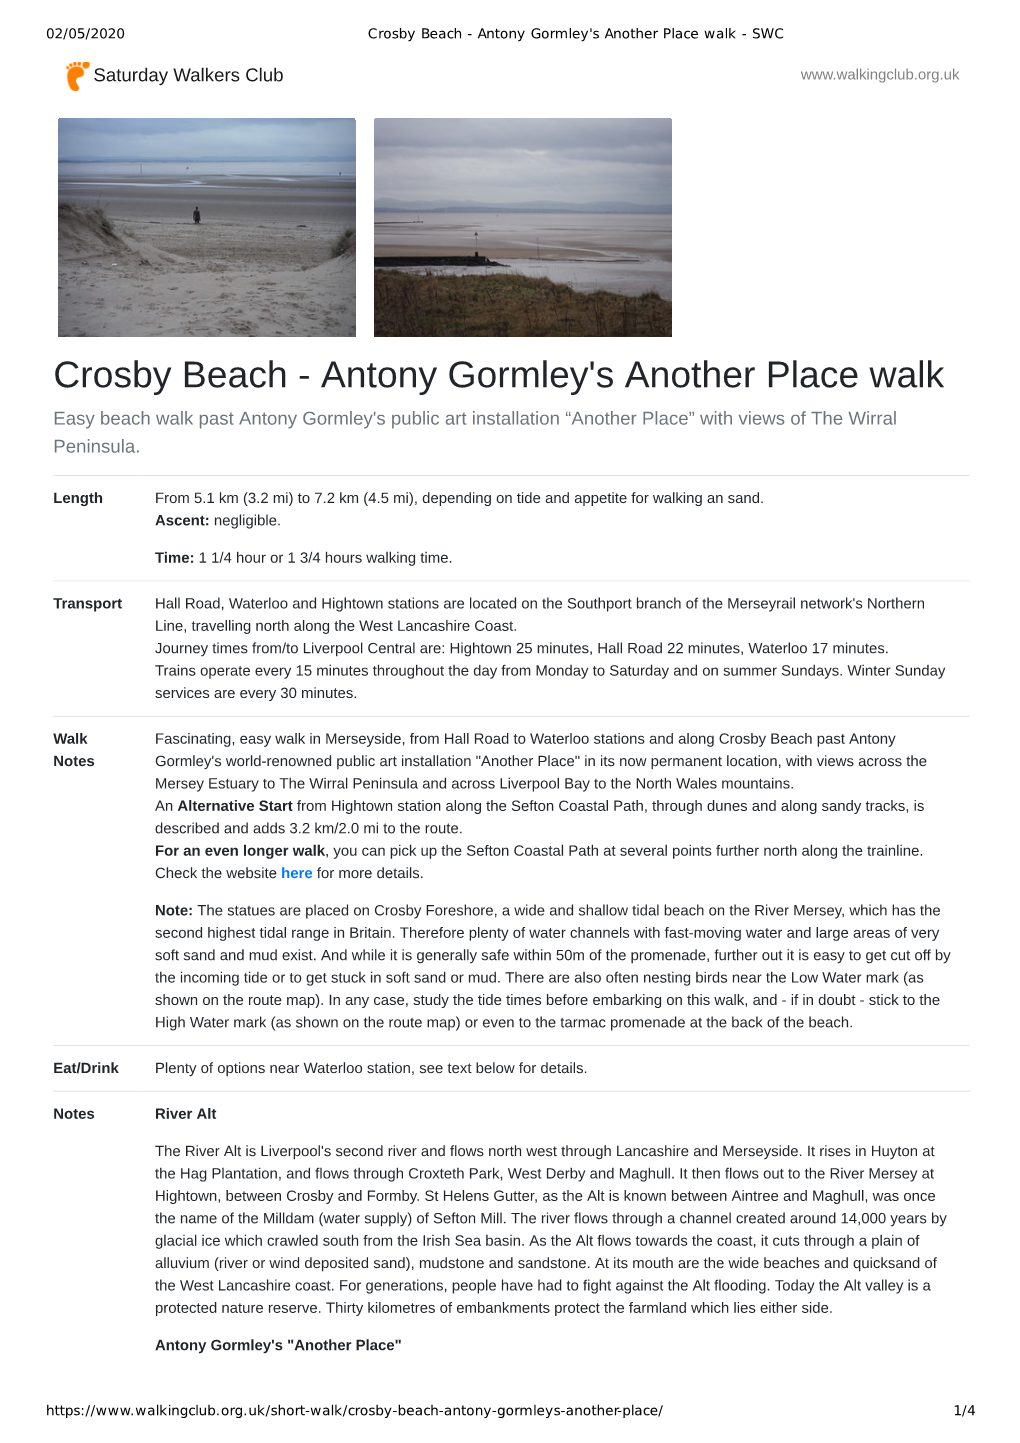 Crosby Beach - Antony Gormley's Another Place Walk - SWC